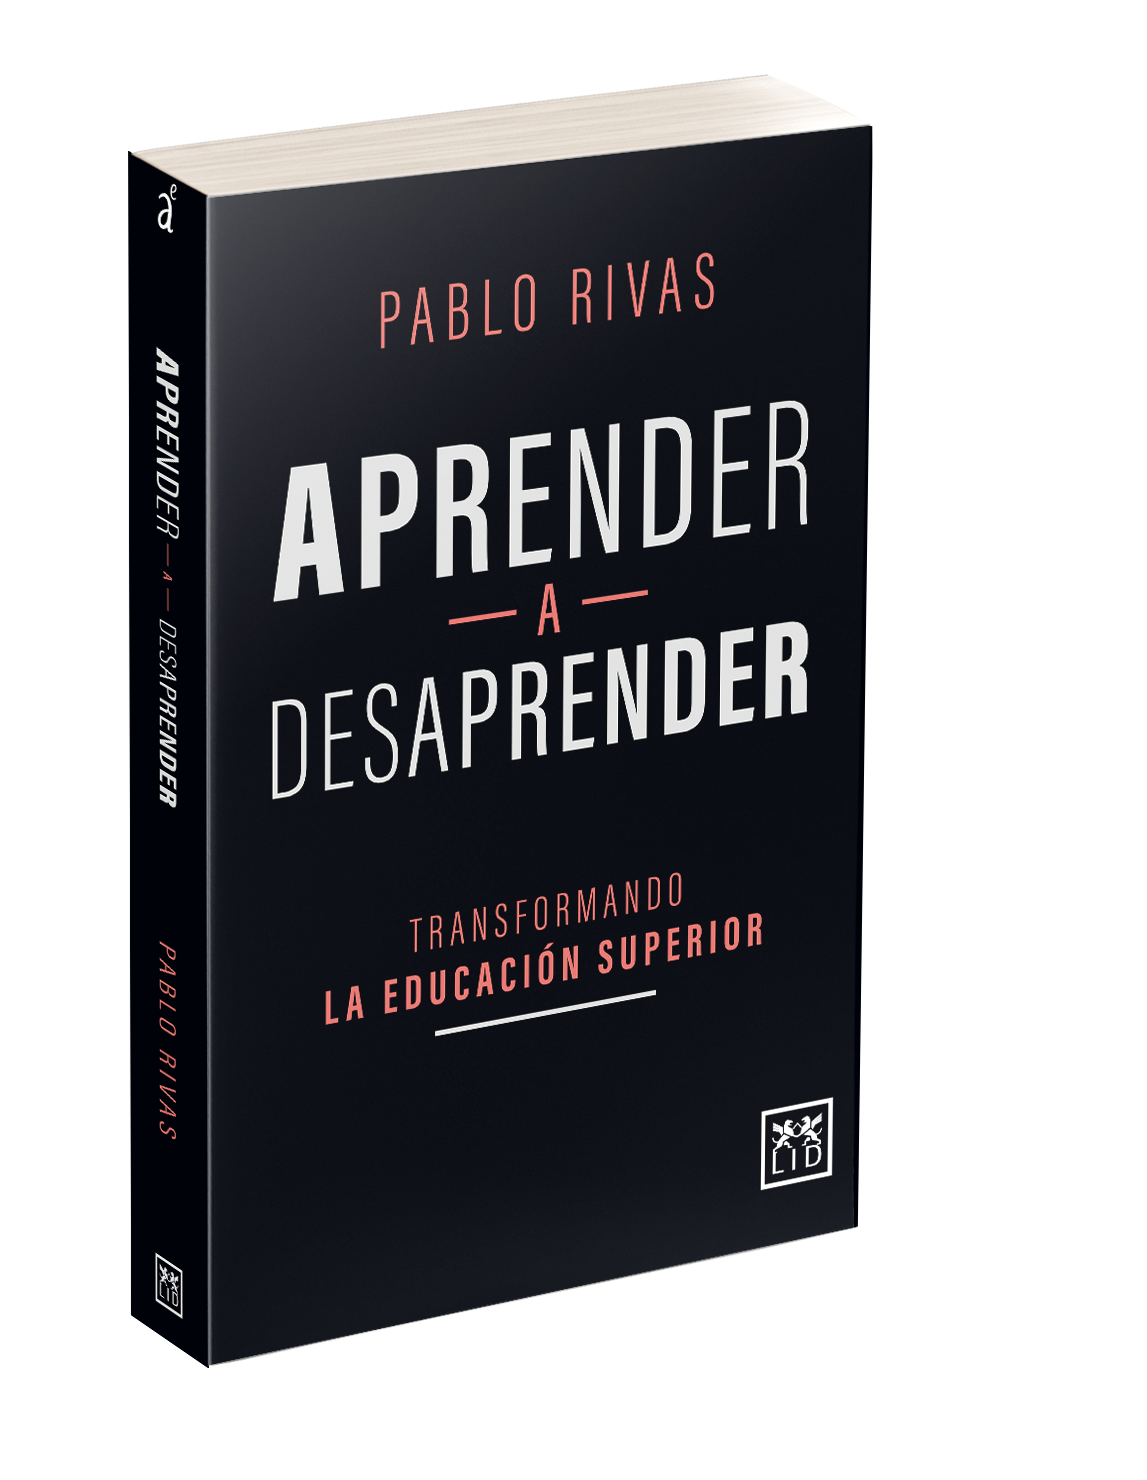 Pablo Rivas, Aprender a desaprender